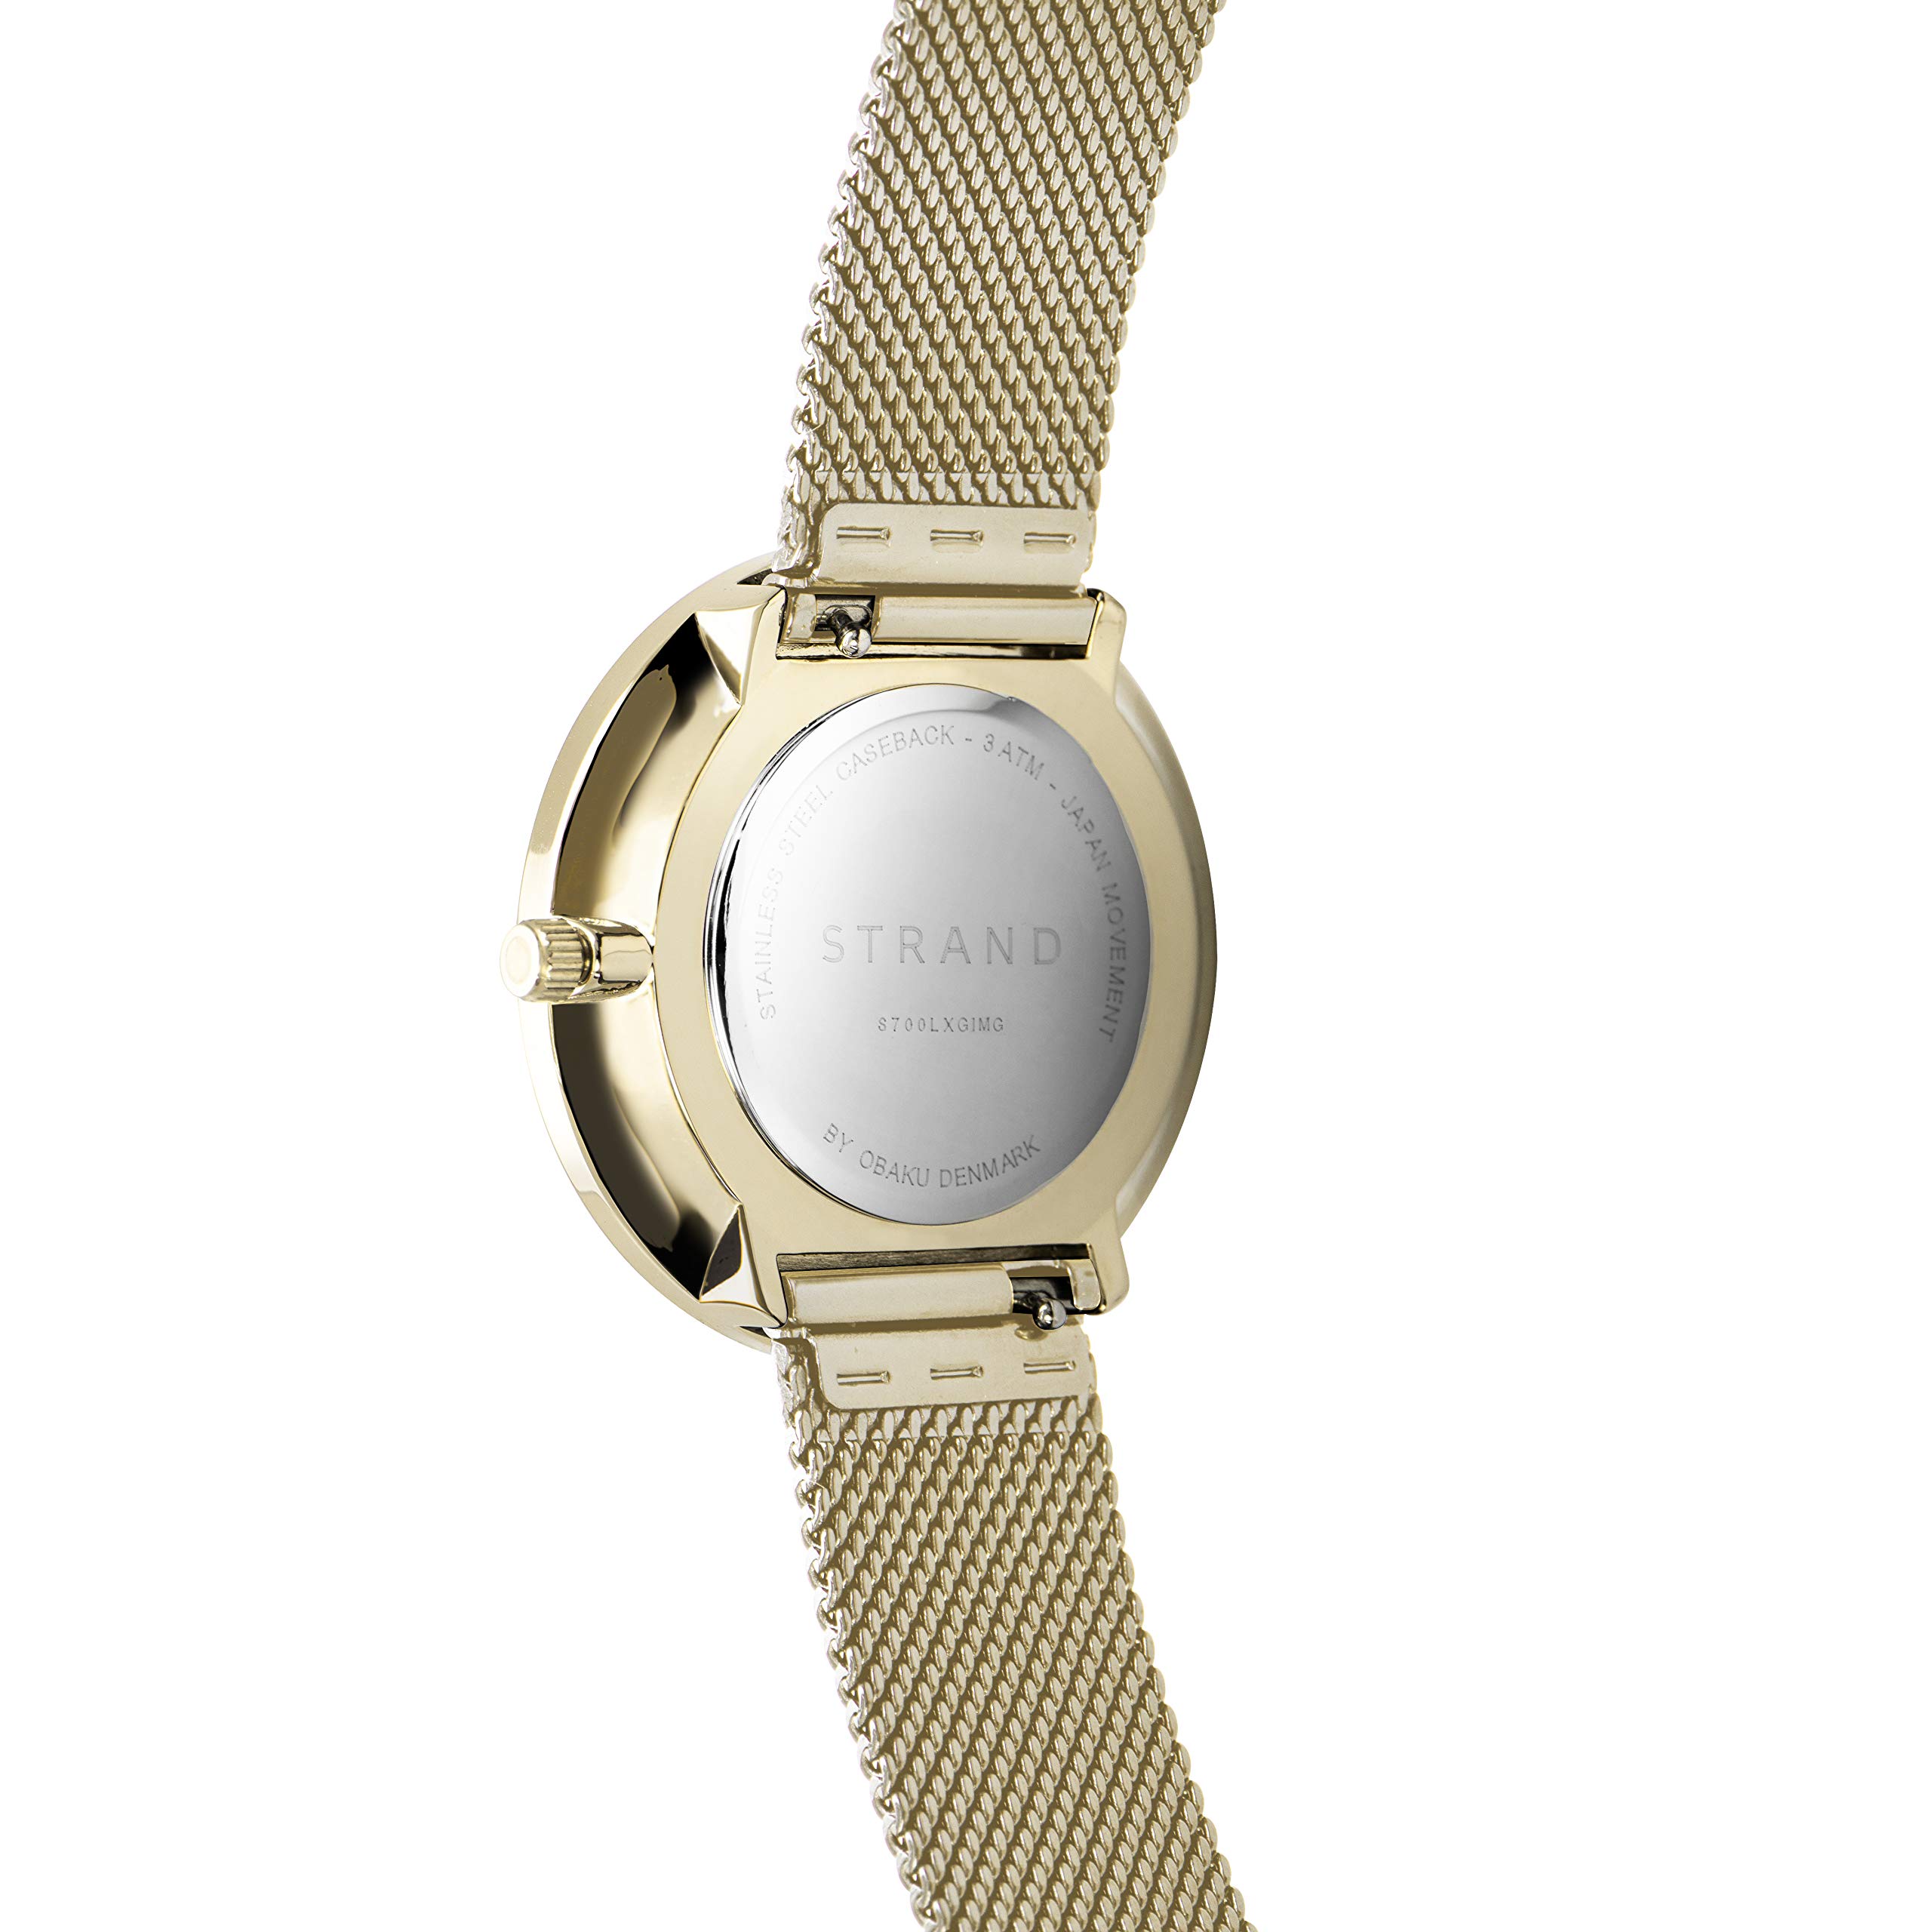 Obaku Strand Slim Style IP Gold Watch with Adjustable mesh Strap.